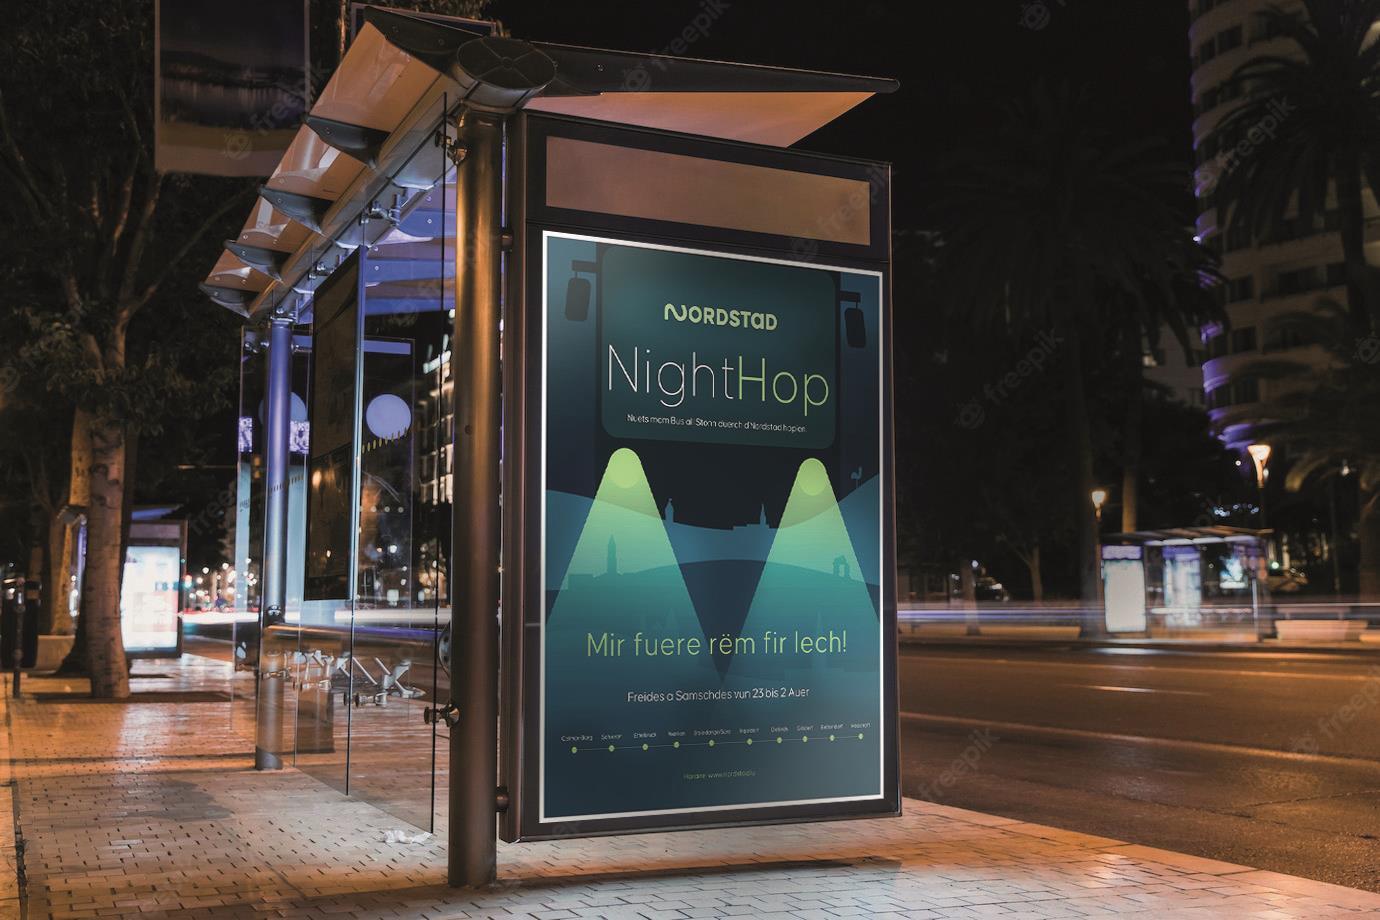 Nighthop - NightHop - Gratis Nuetsbus